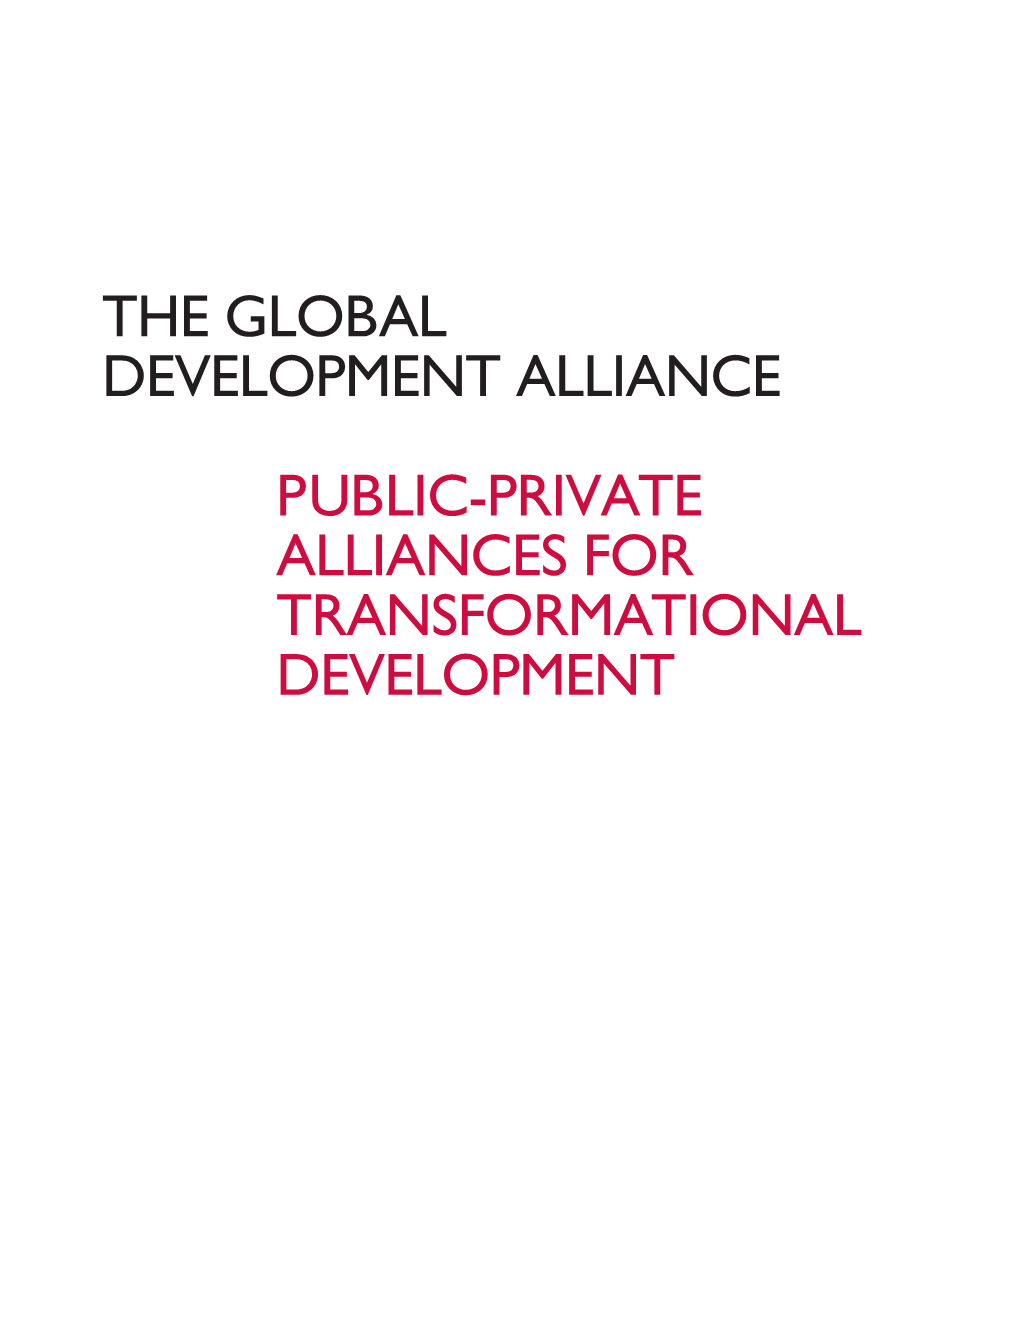 The Global Development Alliance: Public-Private